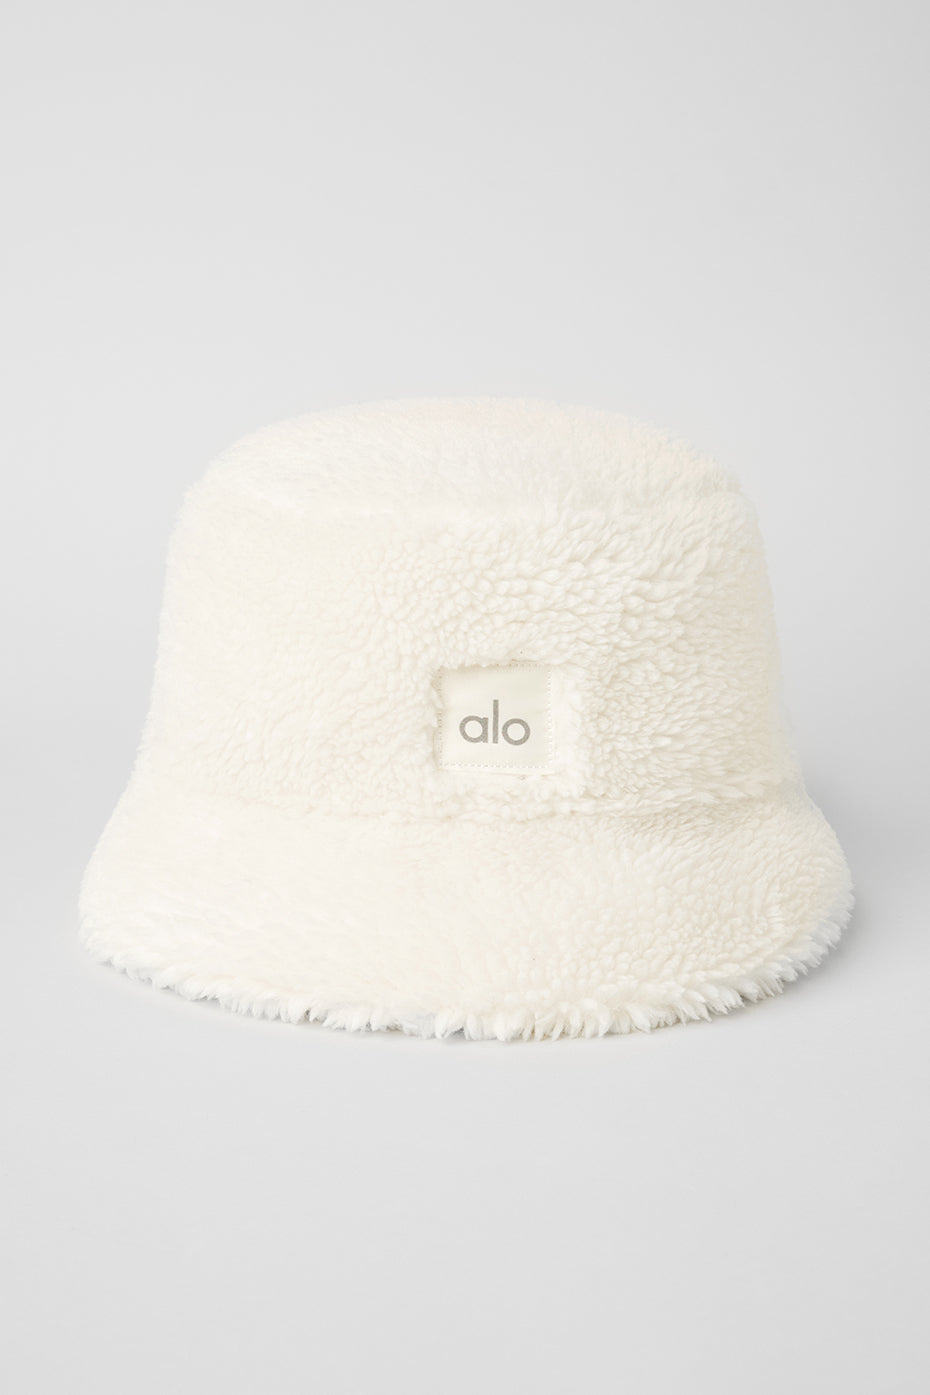 Alo Yoga | Foxy Sherpa Bucket Hat in Ivory White, Size: Small/Medium